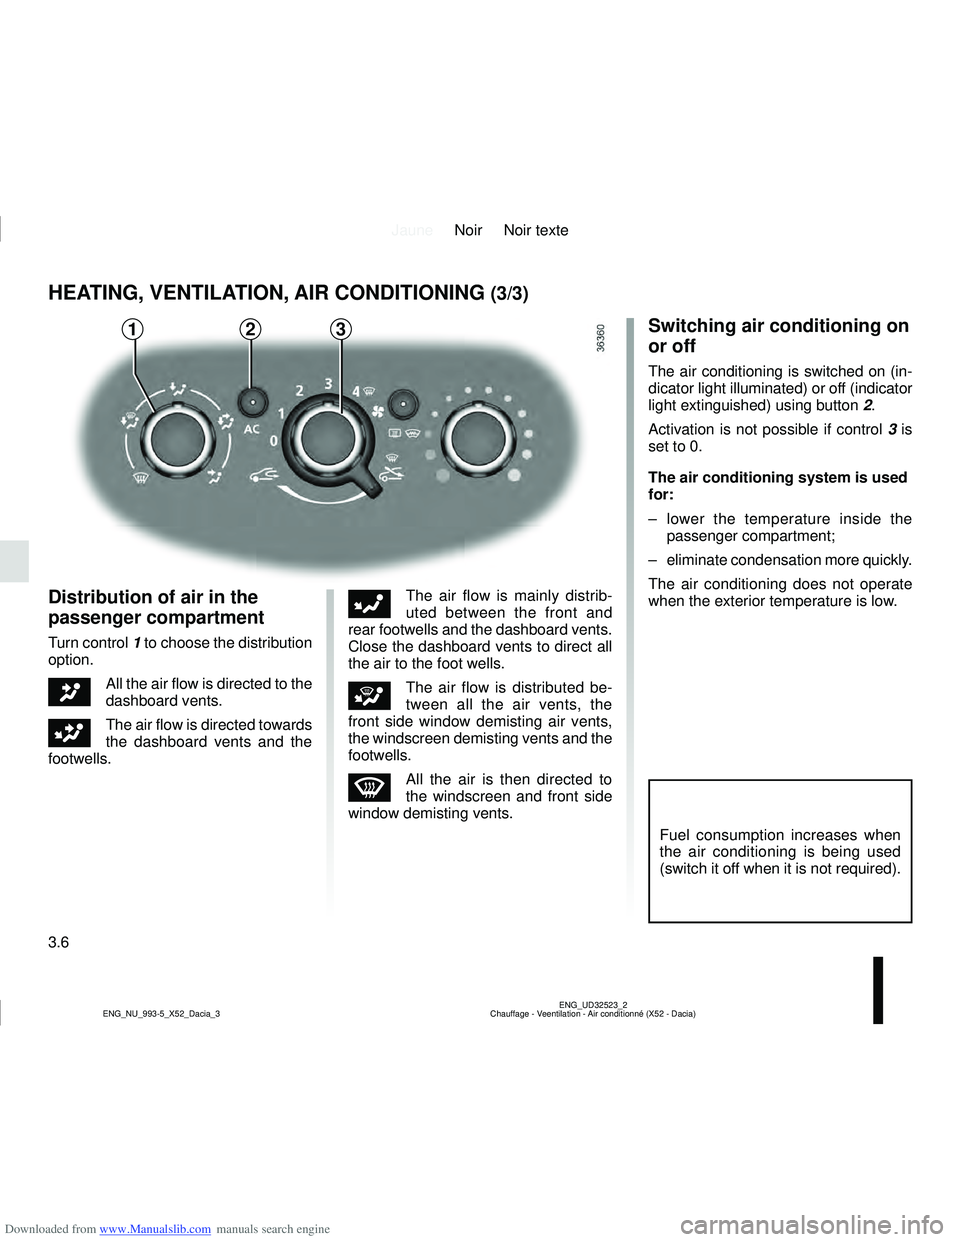 DACIA LOGAN 2015  Owners Manual Downloaded from www.Manualslib.com manuals search engine JauneNoir Noir texte
3.6
ENG_UD32523_2
Chauffage - Veentilation - Air conditionné (X52 - Dacia)
ENG_NU_993-5_X52_Dacia_3
HEATING, VENTILATION,